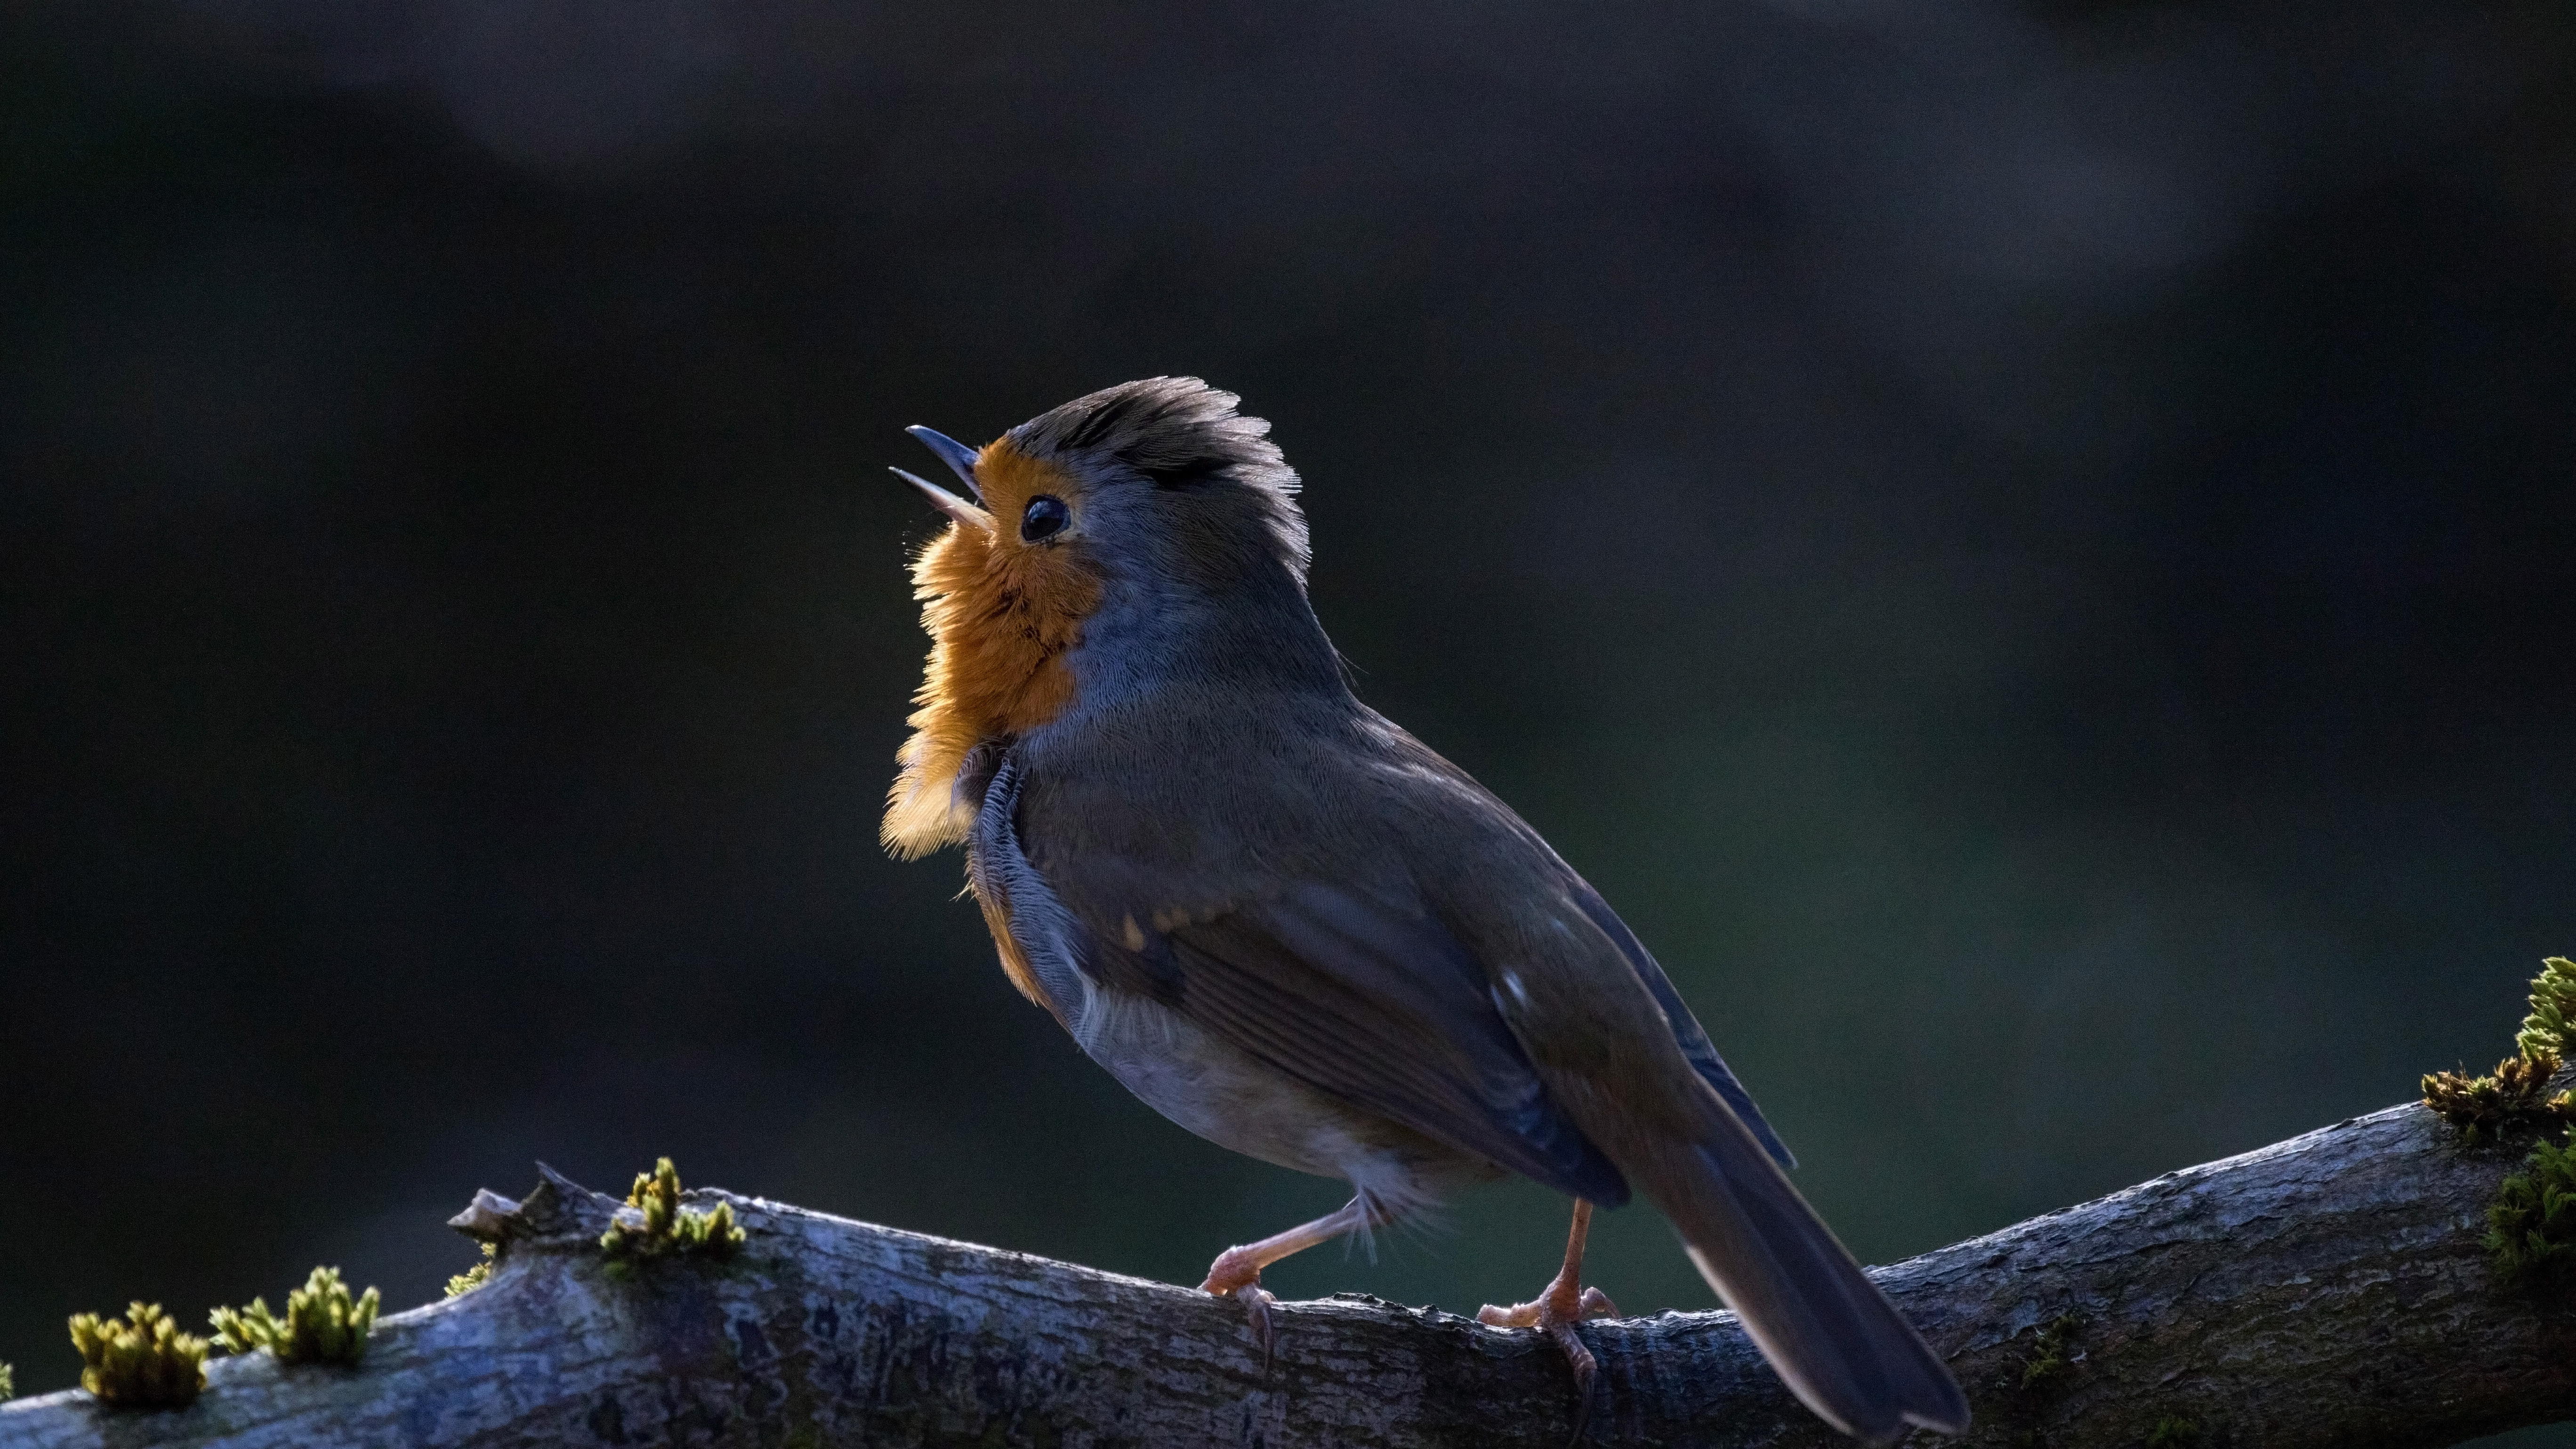 Red robin singing